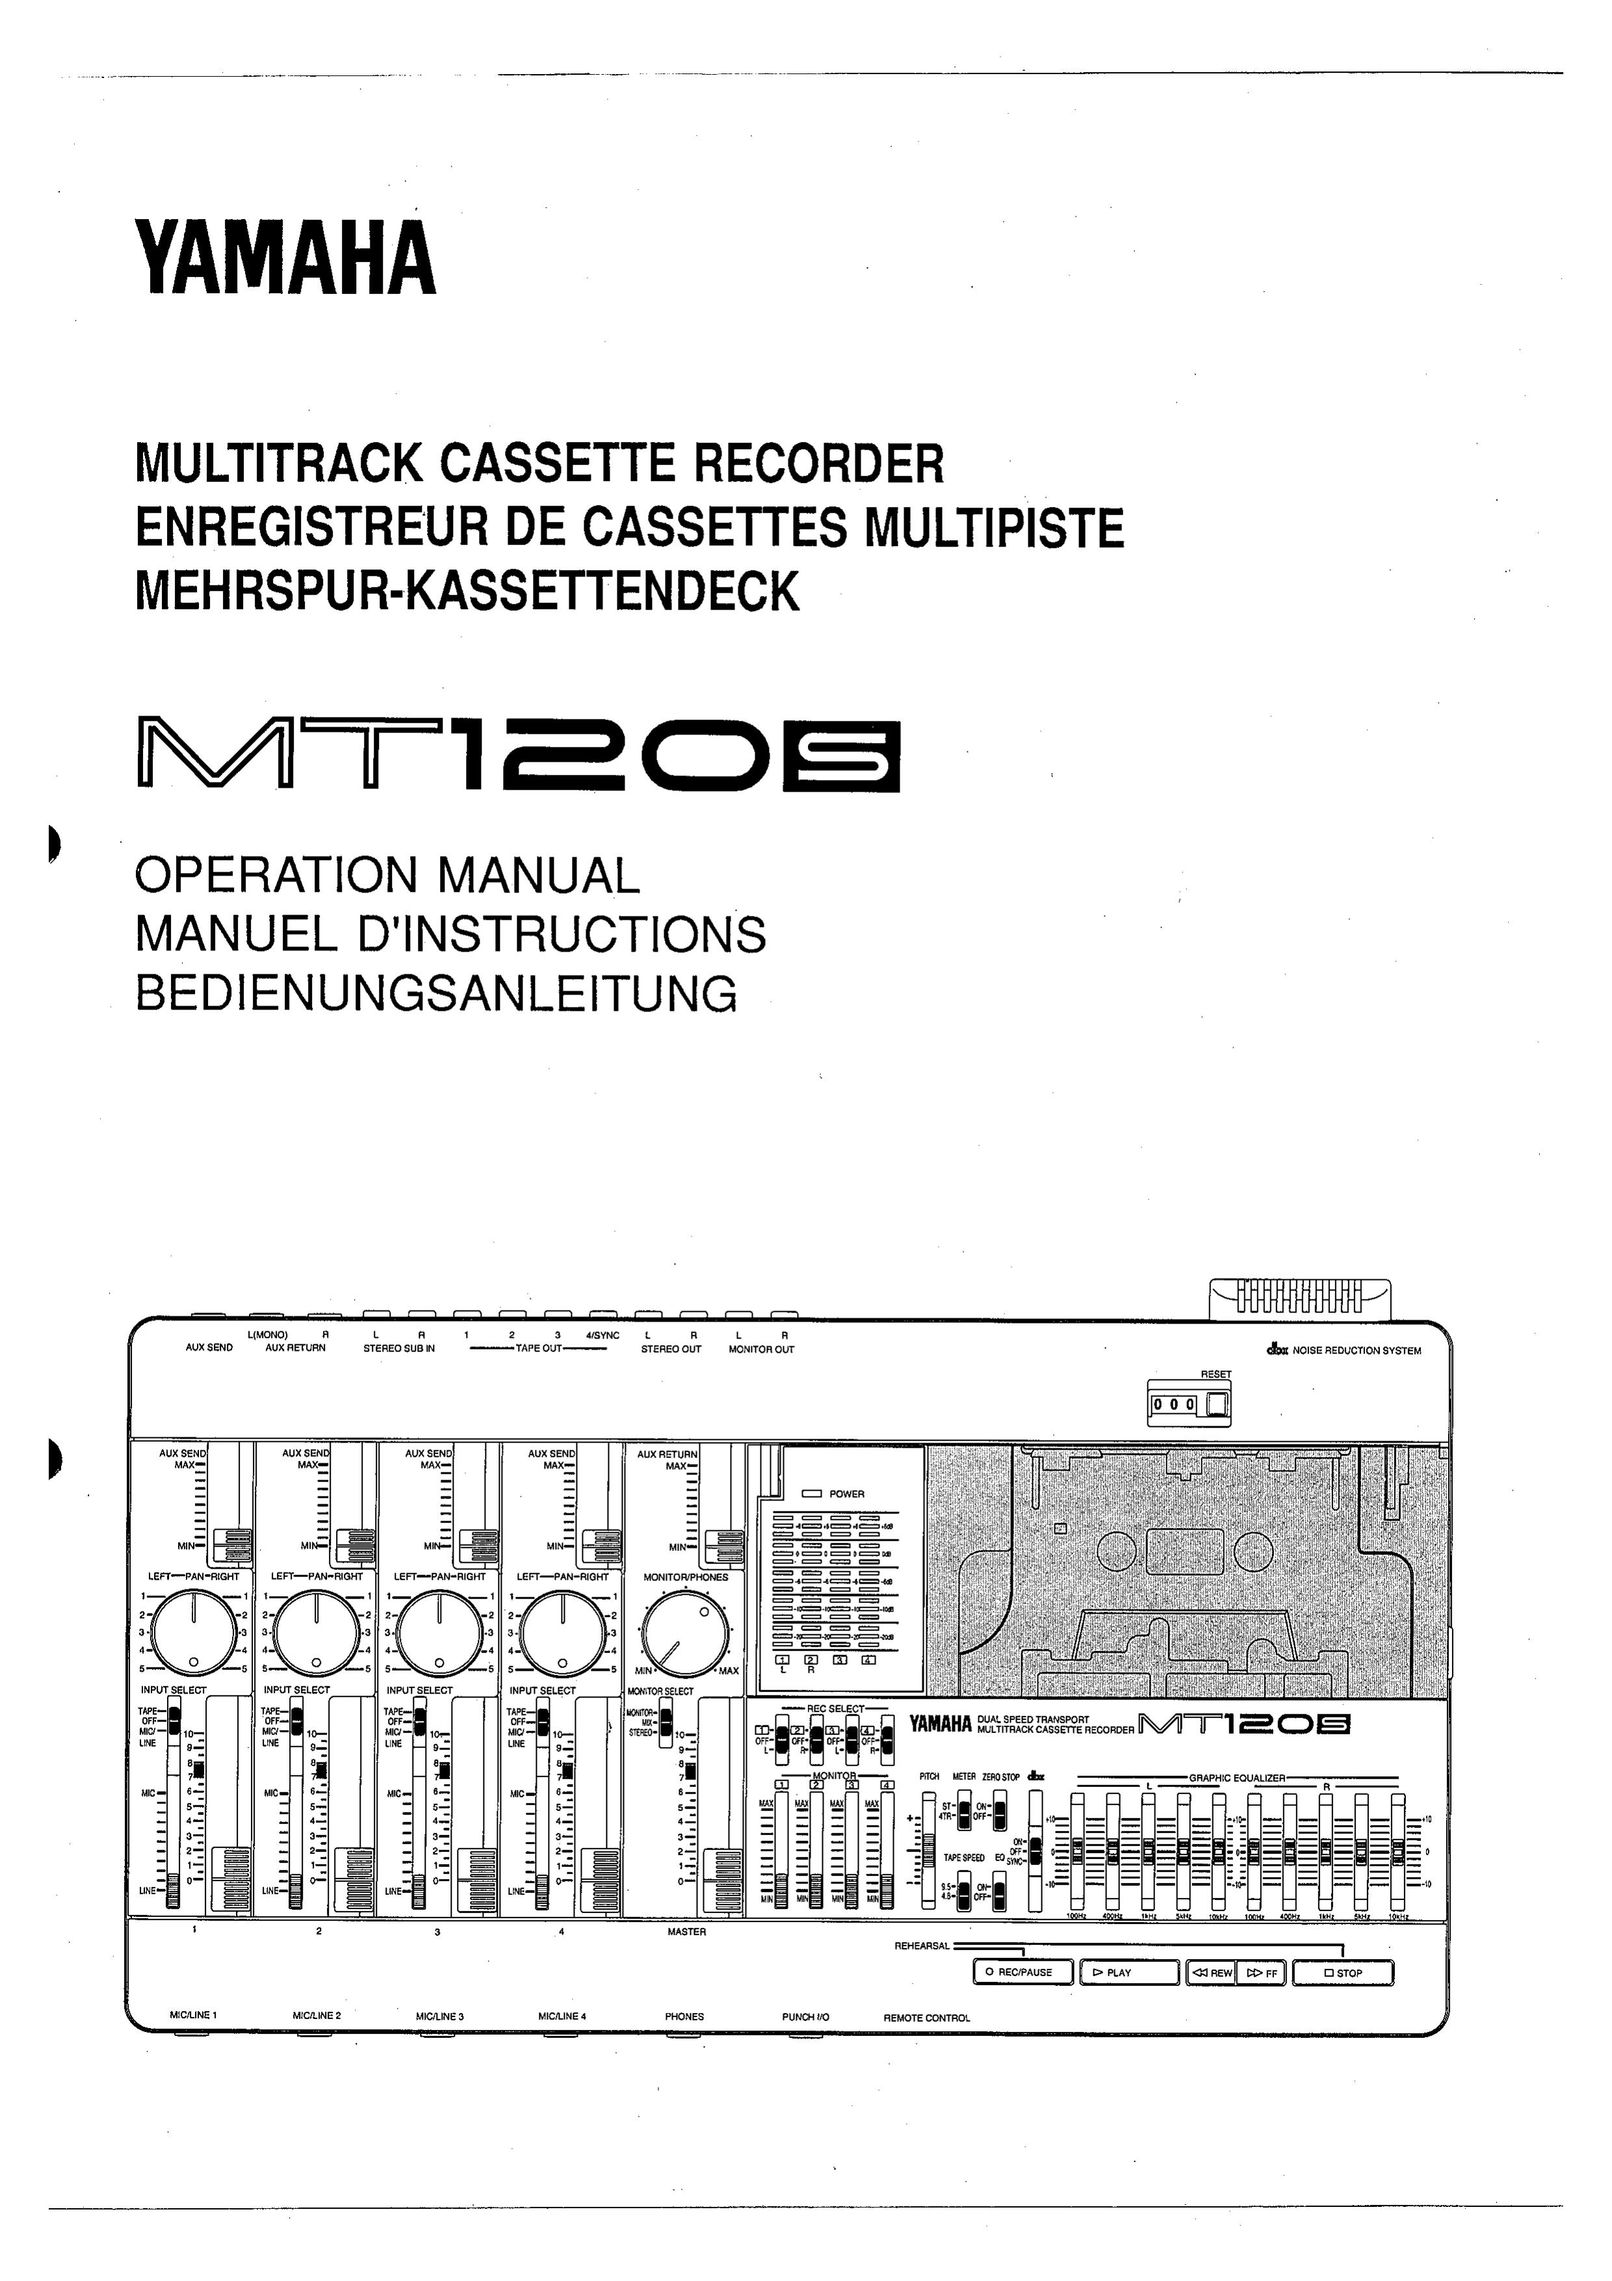 Yamaha MT120S Microcassette Recorder User Manual